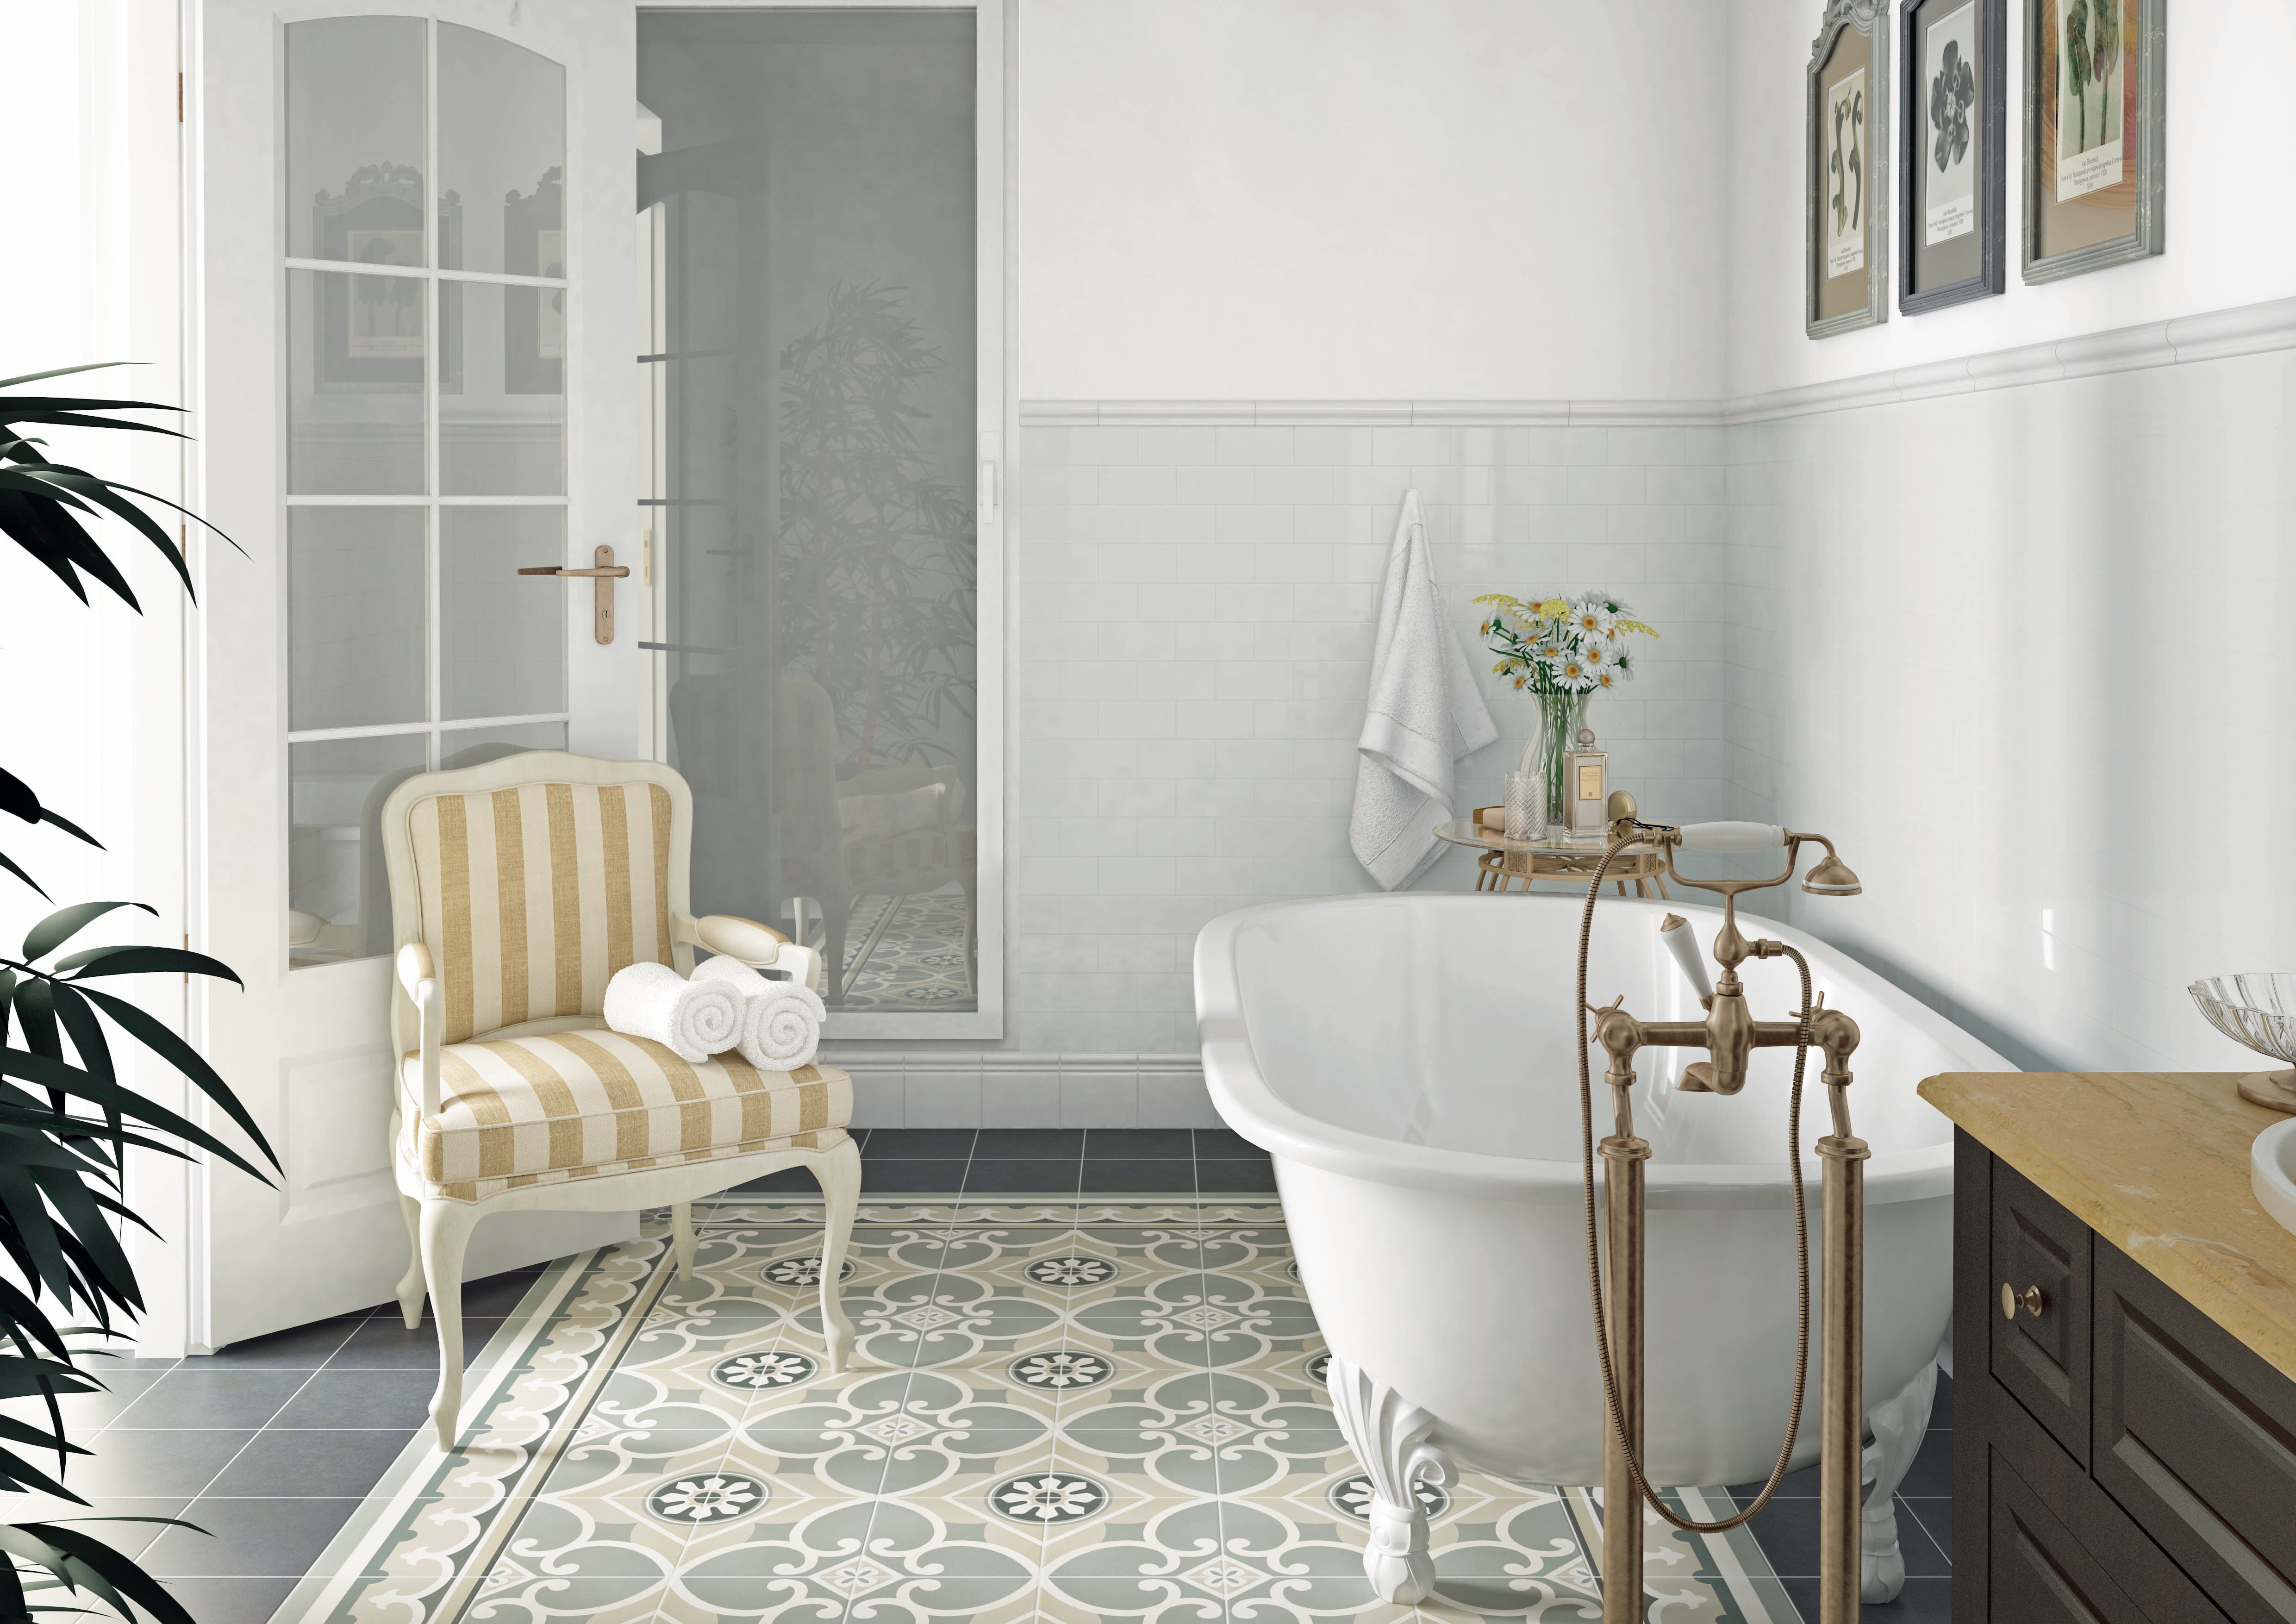 Living Bathroom - Tile Trends 2016